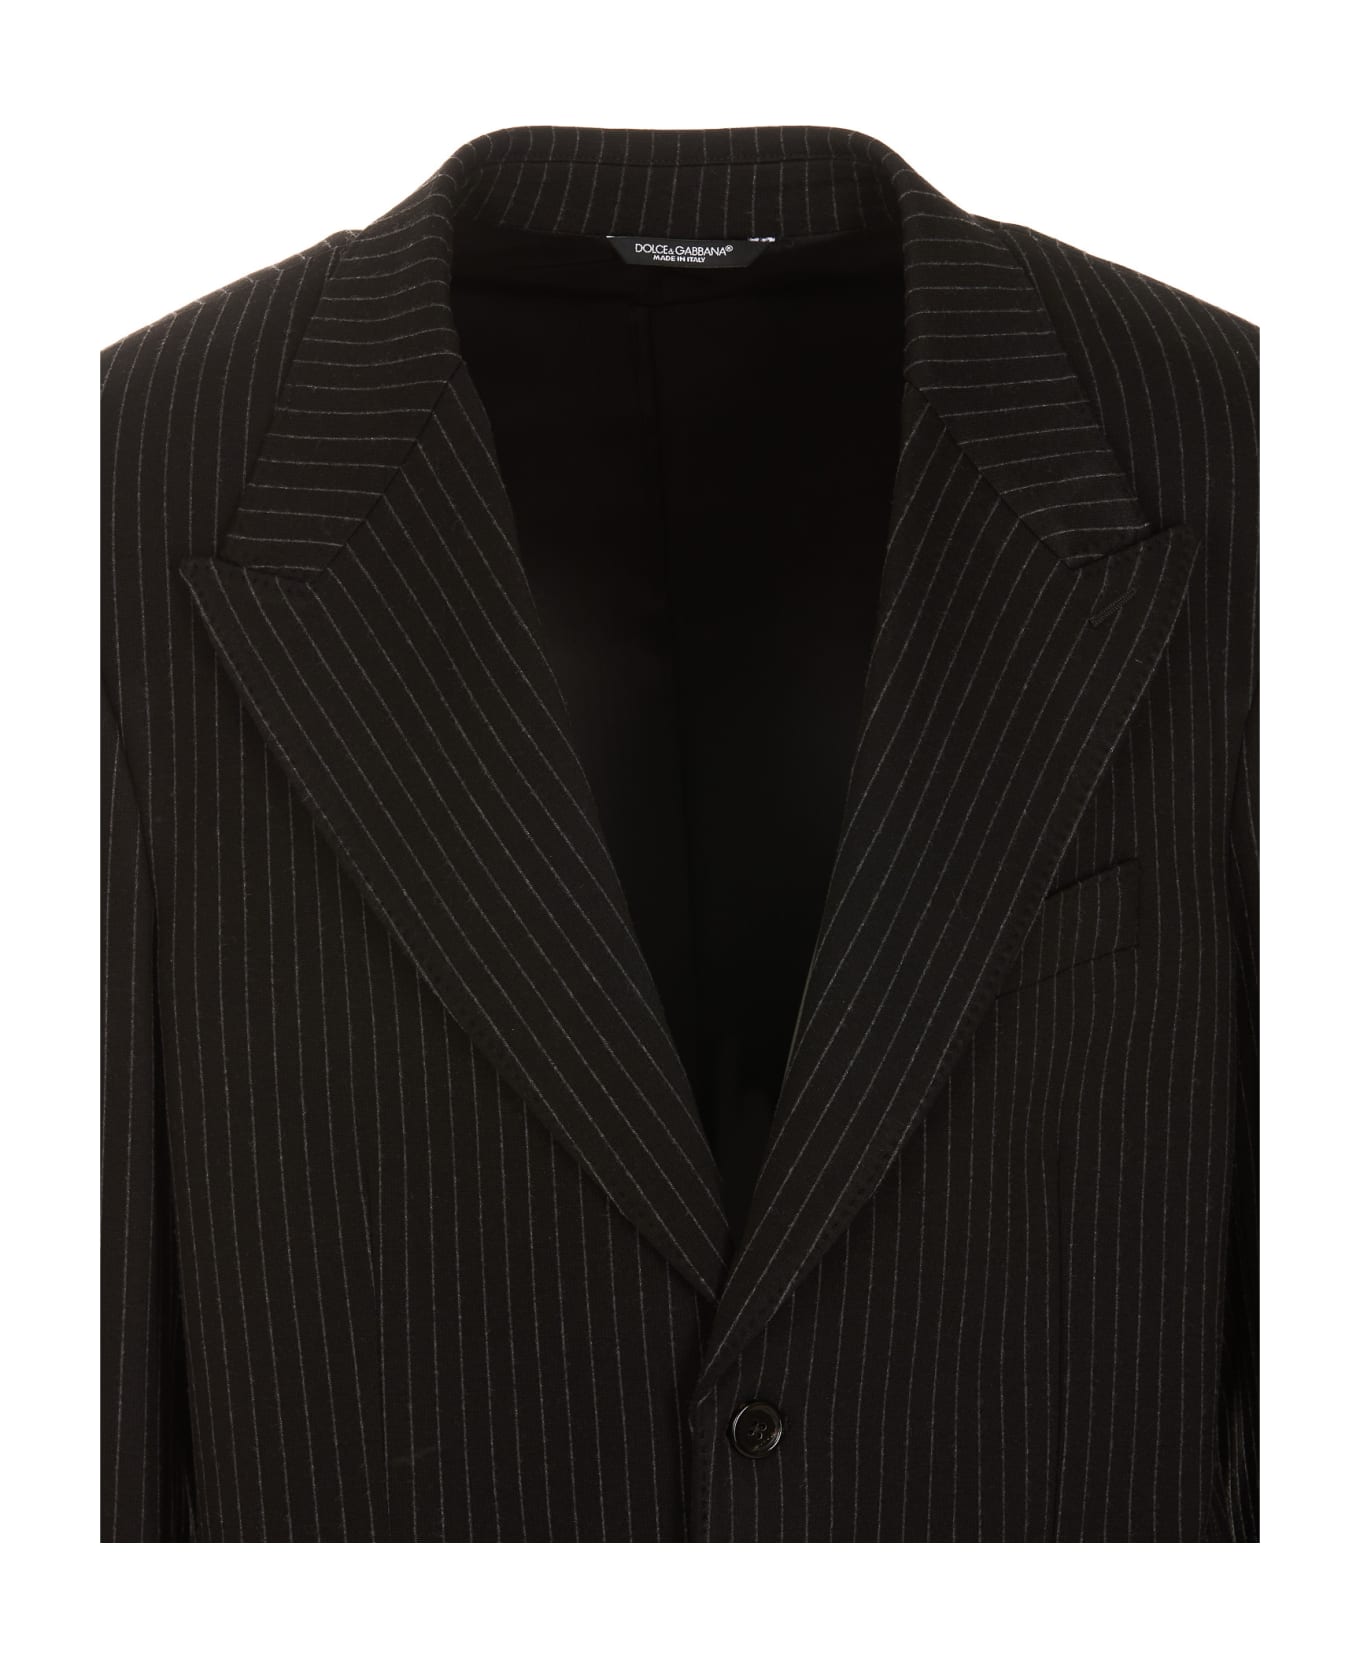 Dolce & Gabbana Striped Jacket - BLACK